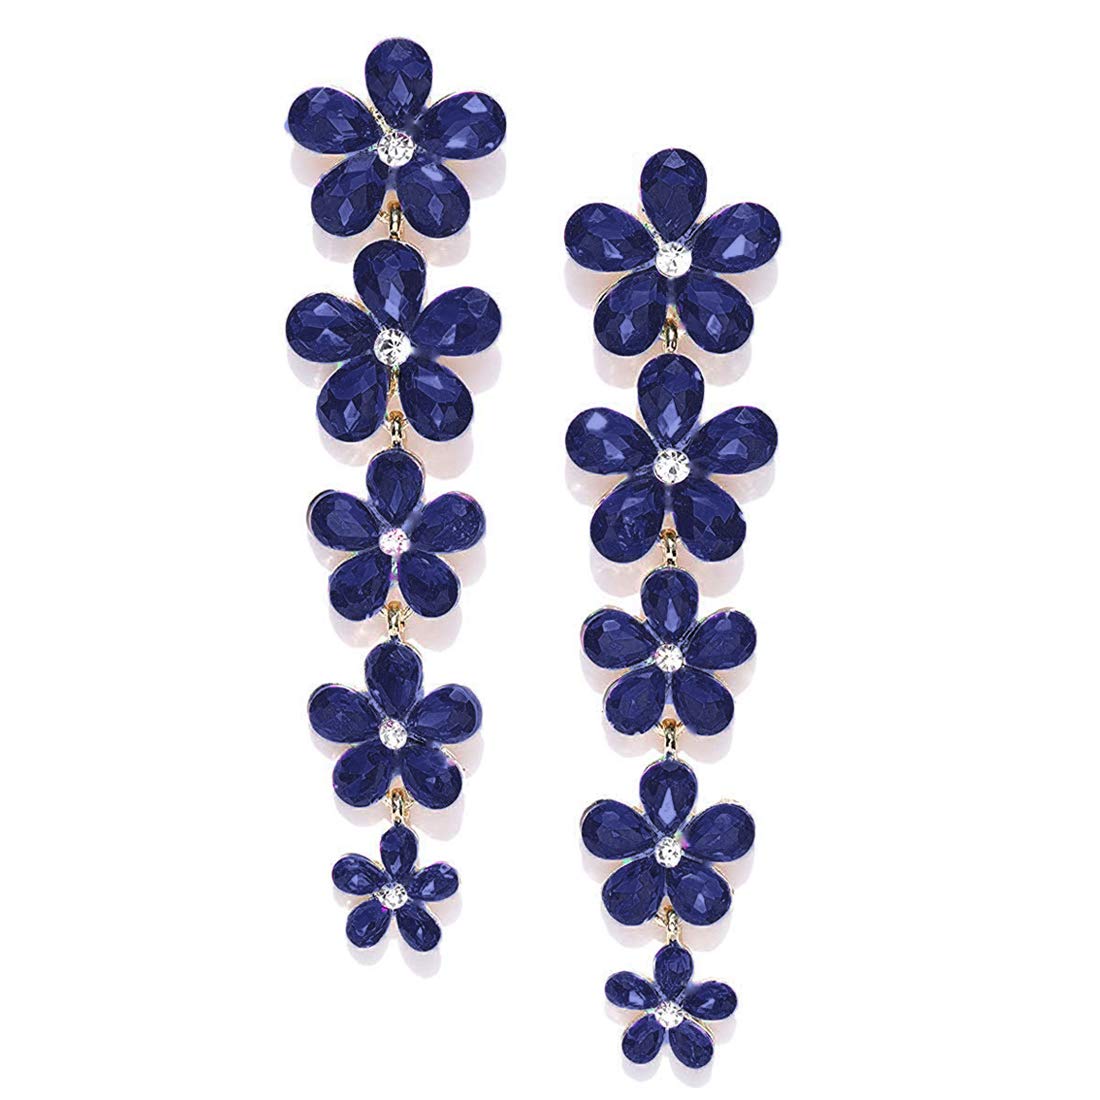 Yellow Chimes Danglers Earrings for Women Blue Crystal Dangler Earrings Classic Floral Design Long Dangler Earrings for Women and Girls.